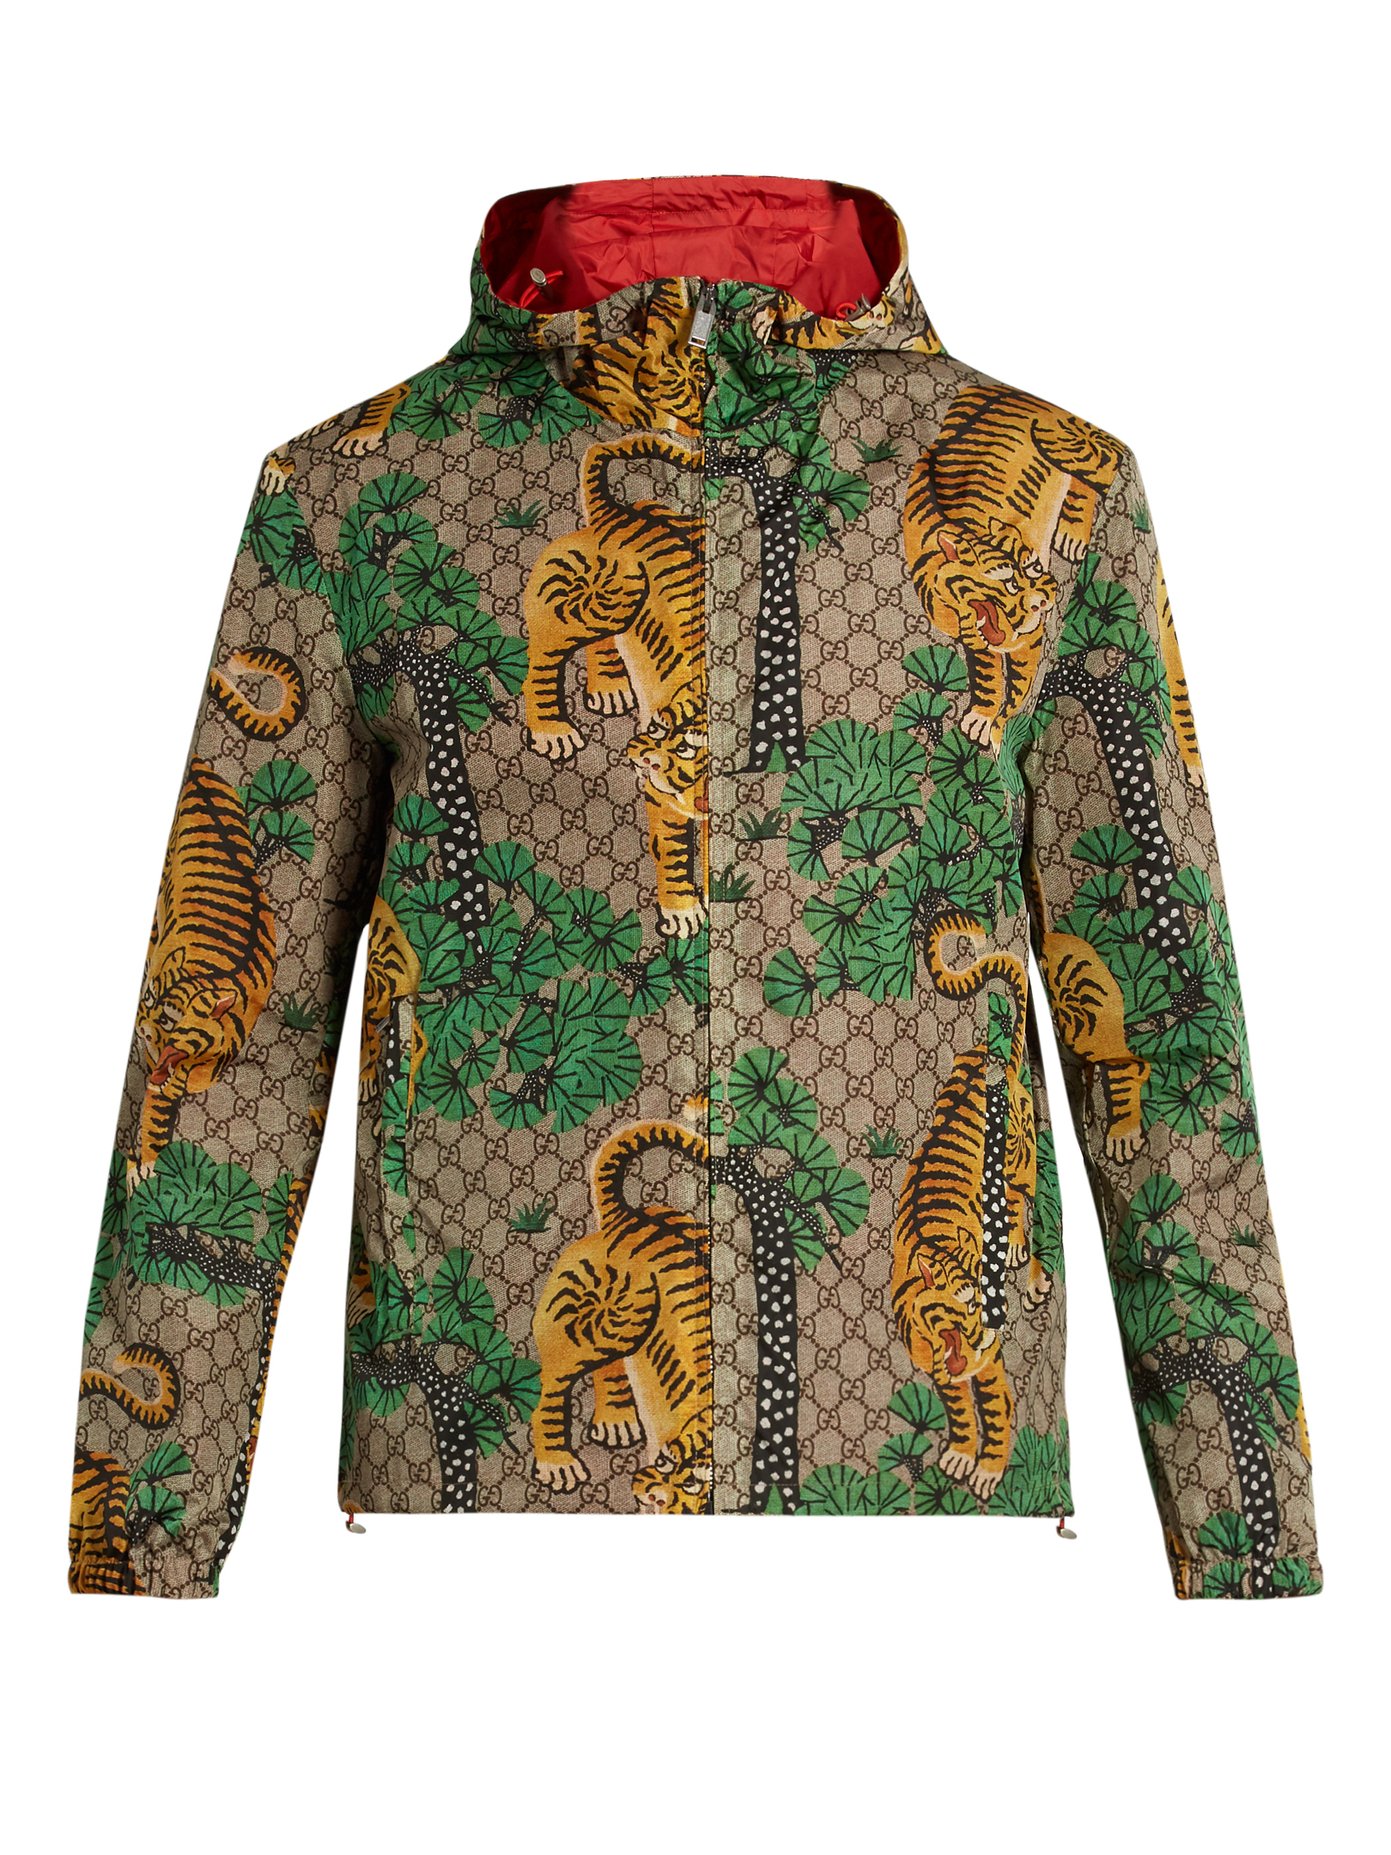 gucci bengal tiger jacket, OFF 73%,Buy!